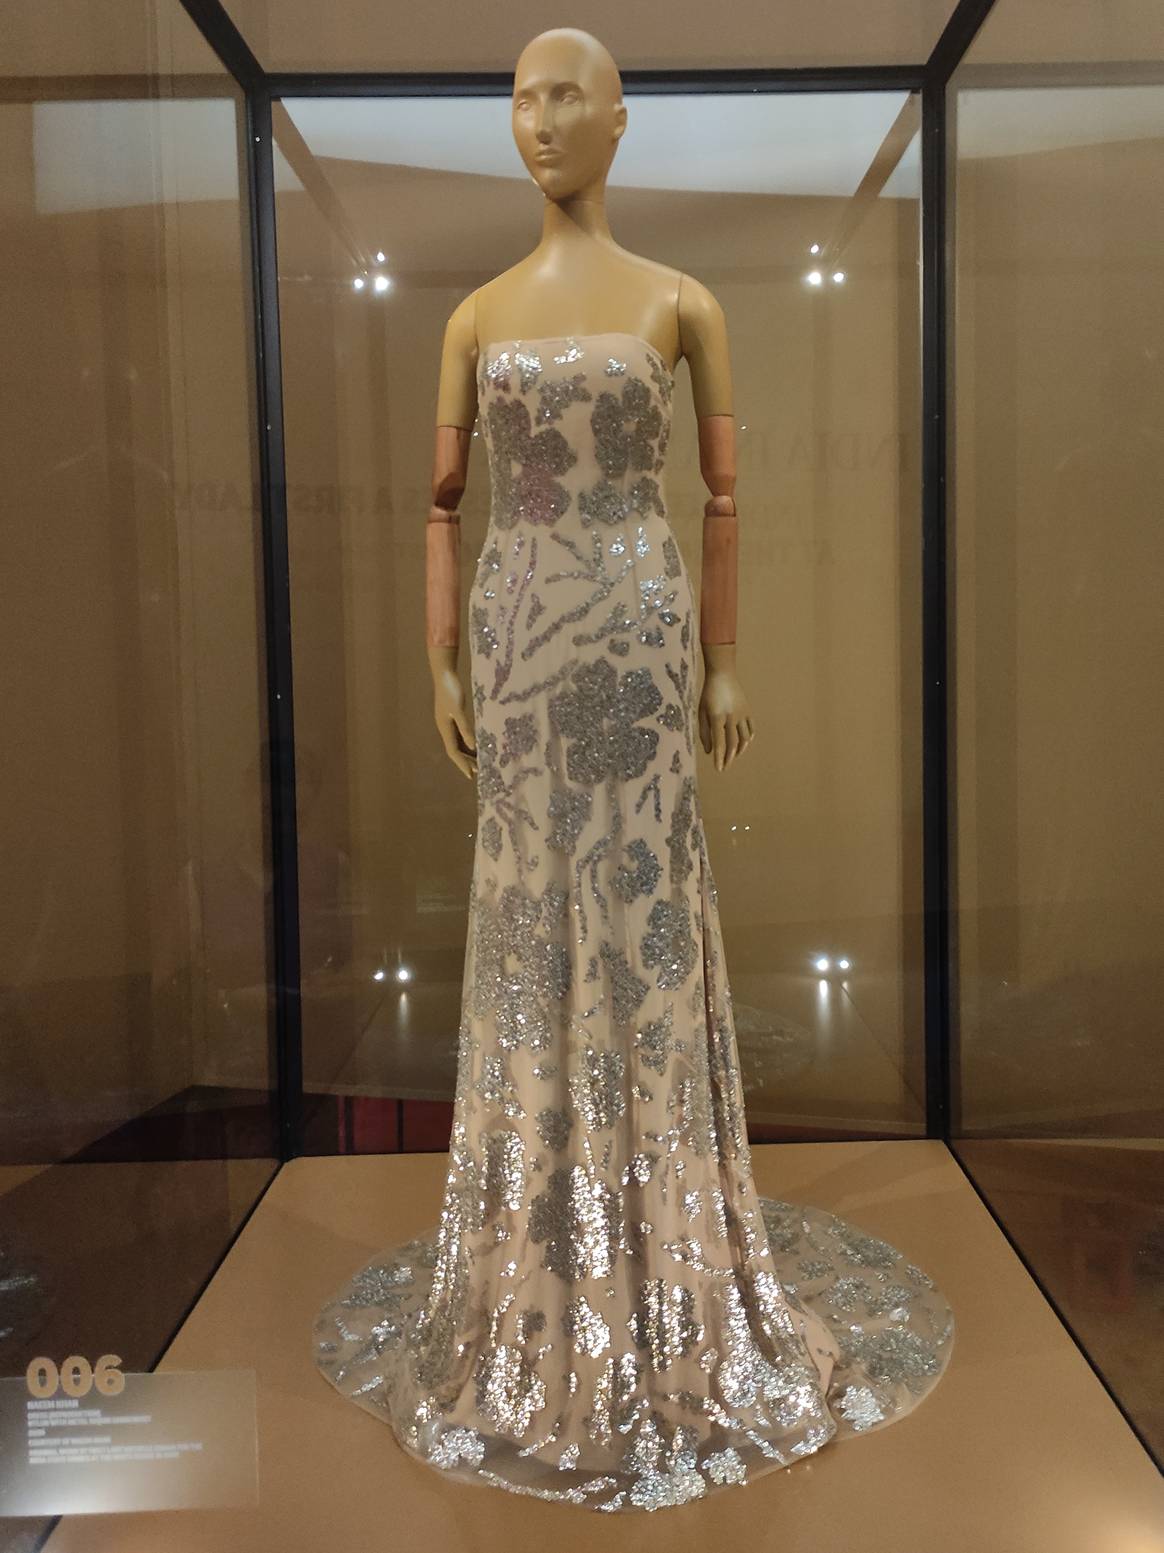 The Taeem Khan dress worn by Michelle Obama. Image: Sumit Suryawanshi for FashionUnited